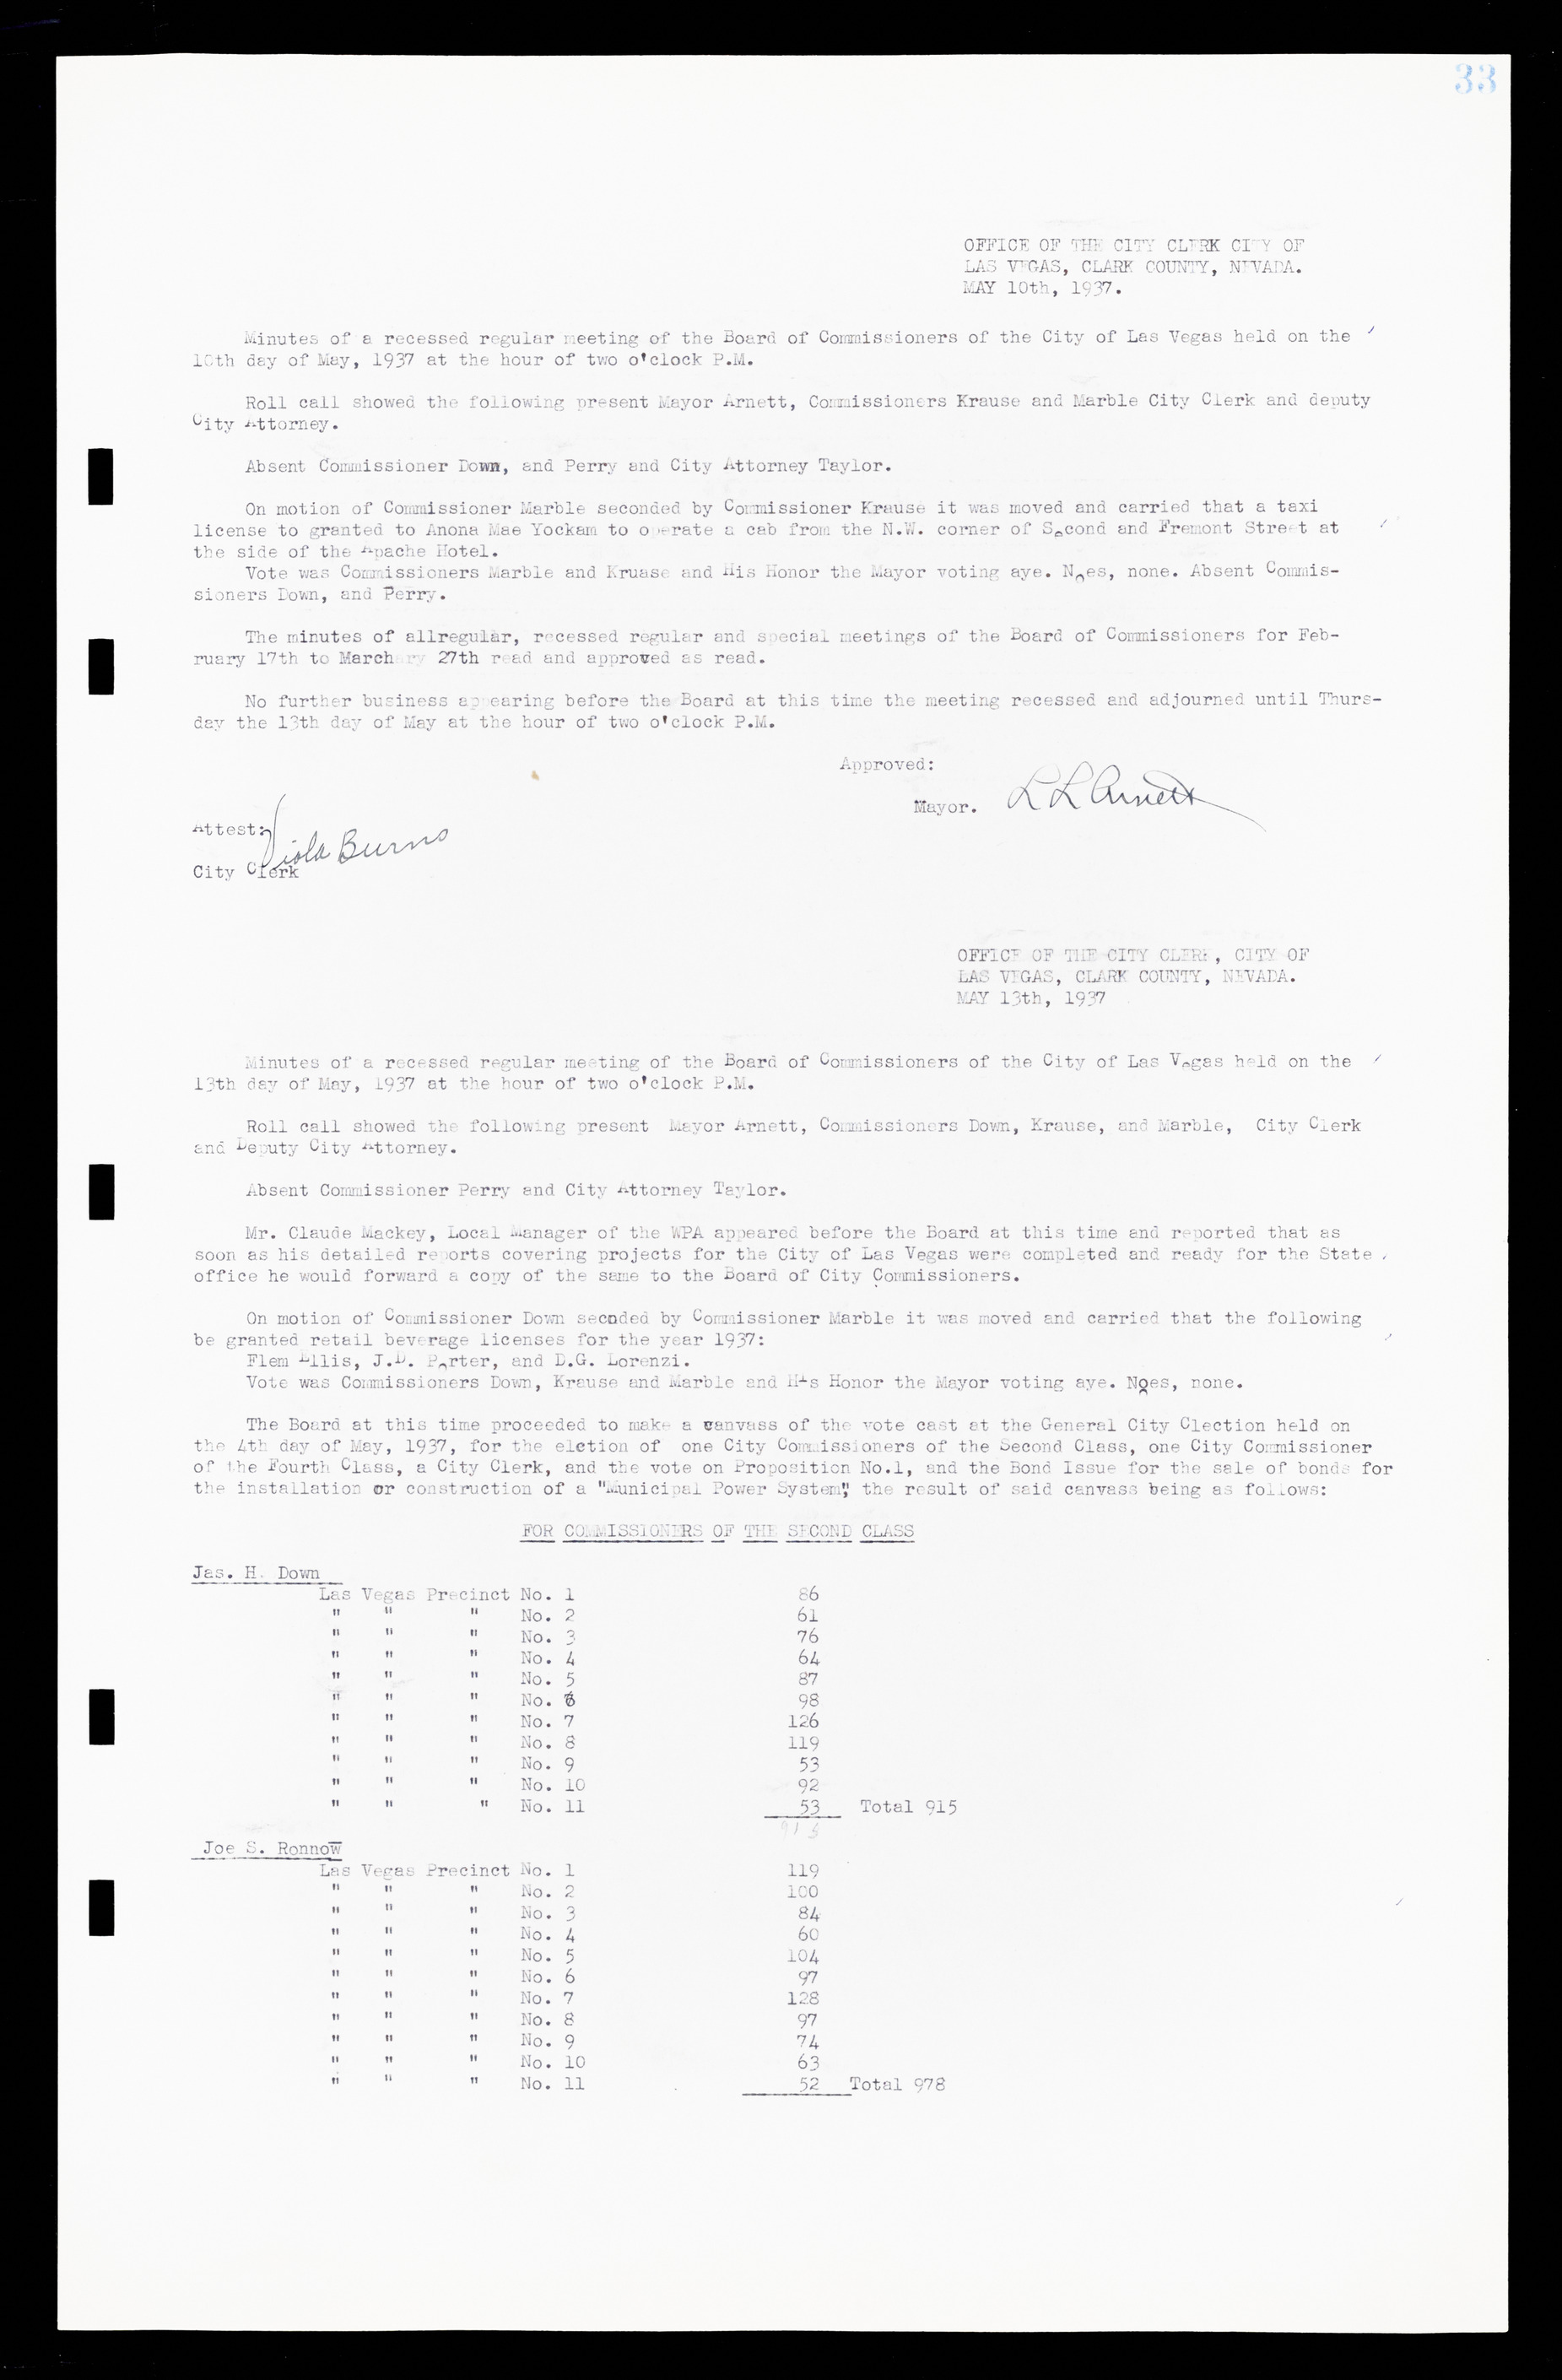 Las Vegas City Commission Minutes, February 17, 1937 to August 4, 1942, lvc000004-39